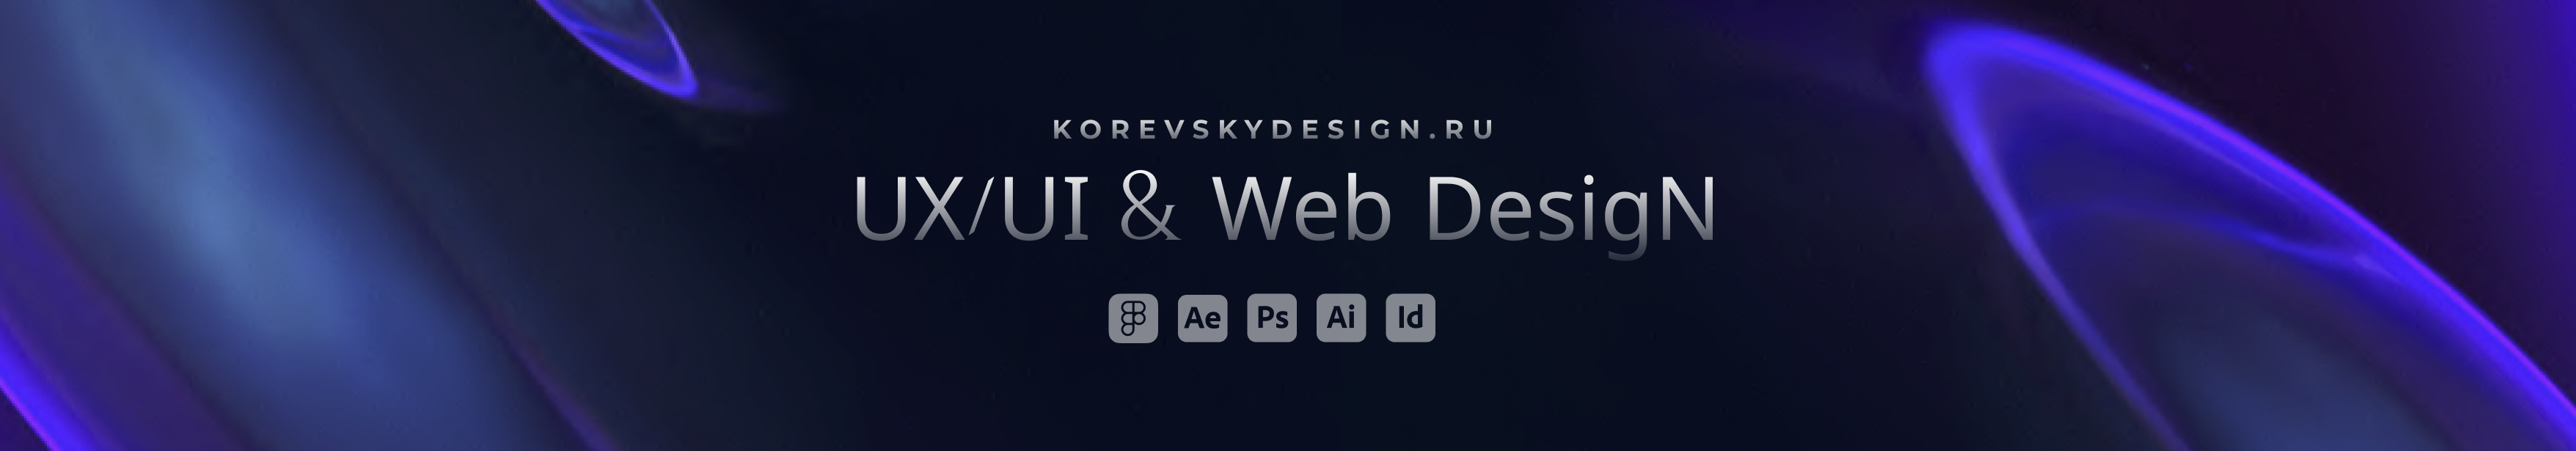 Anna Korevskaya's profile banner